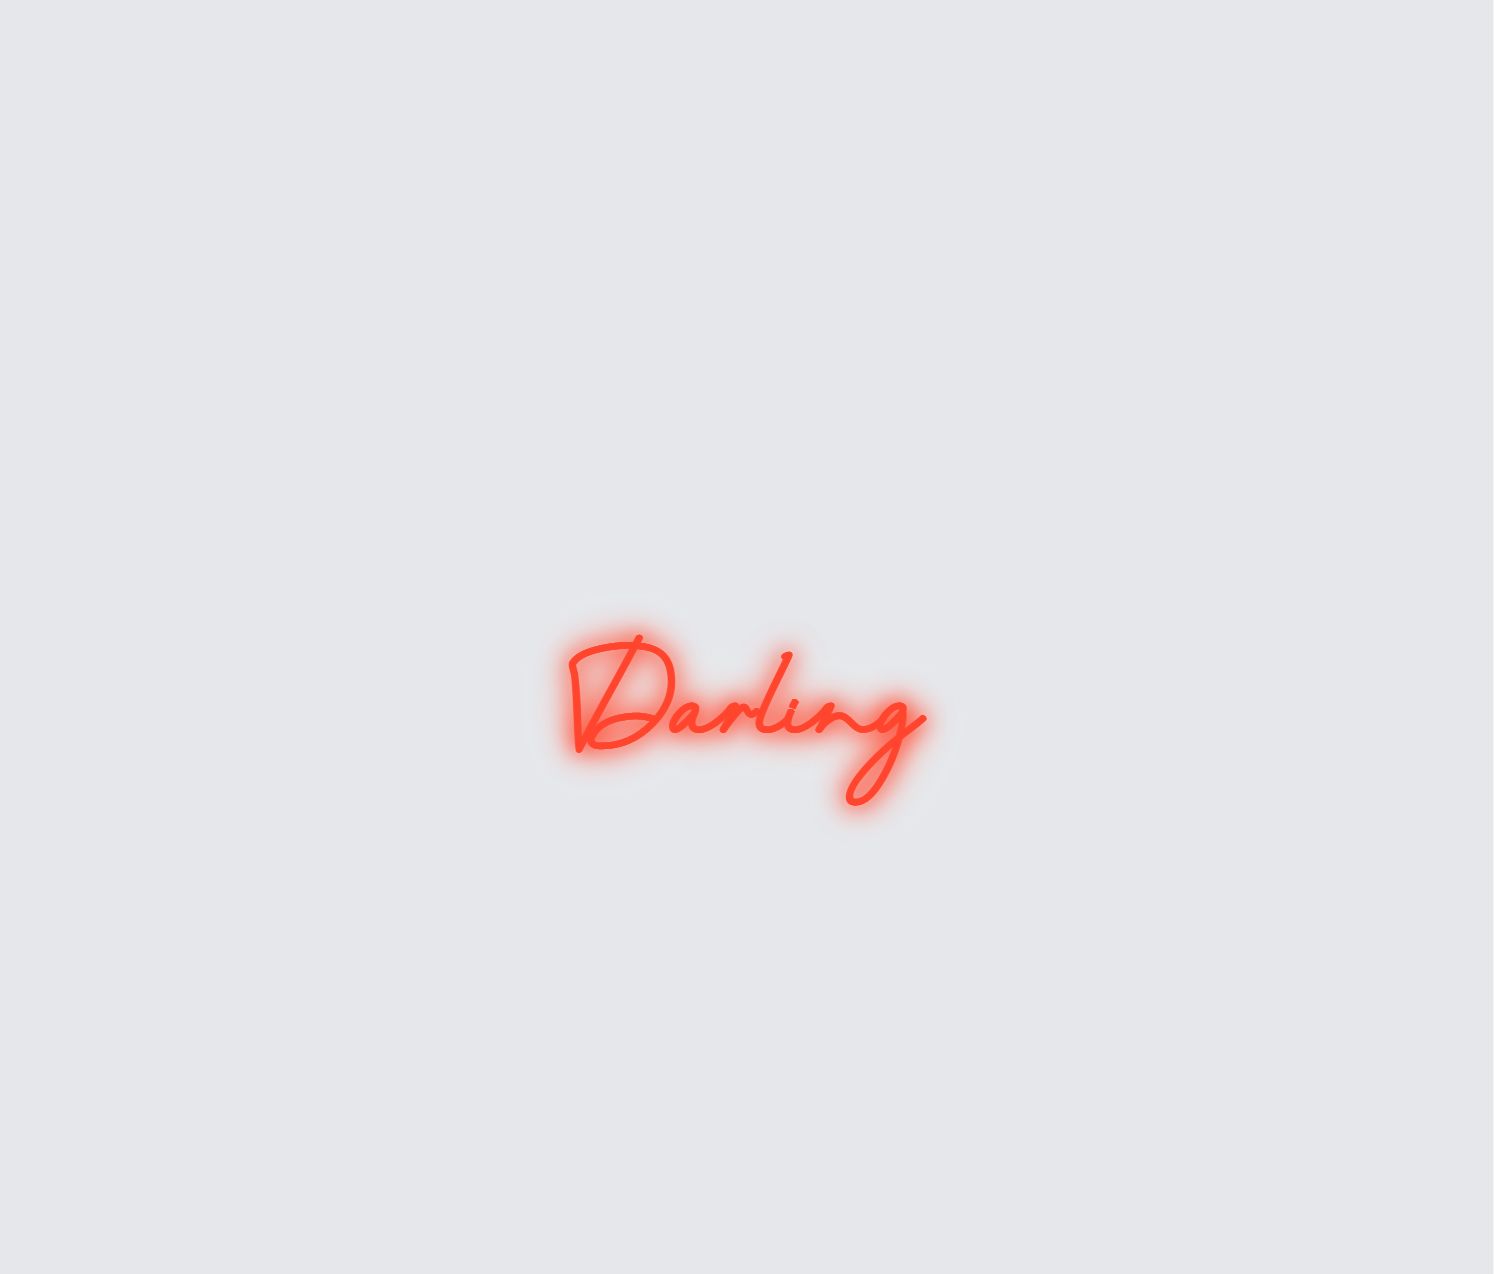 Custom neon sign - Darling